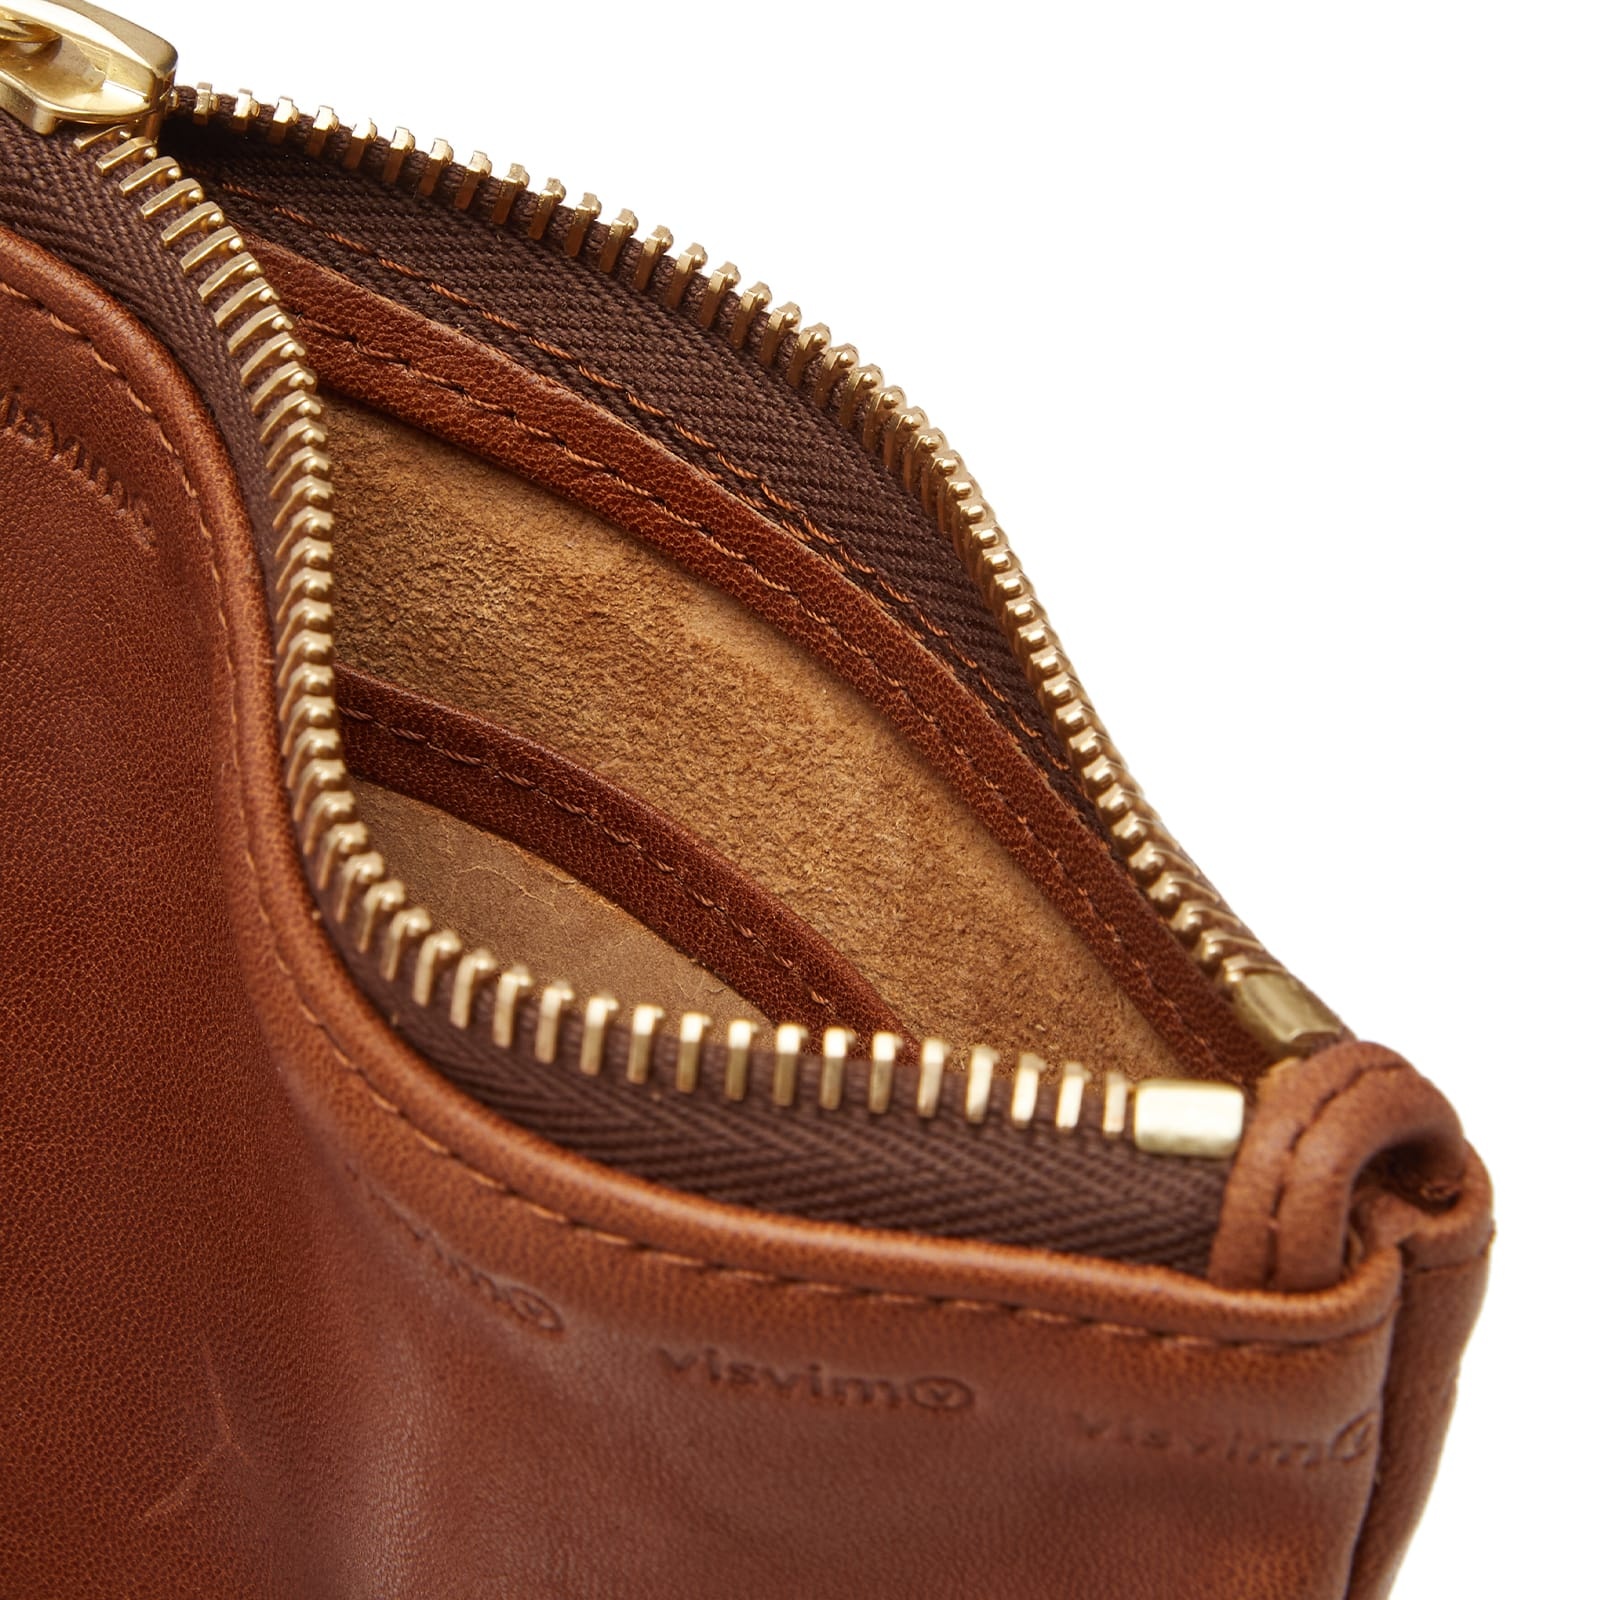 visvim Vivism Leather Wallet | REVERSIBLE